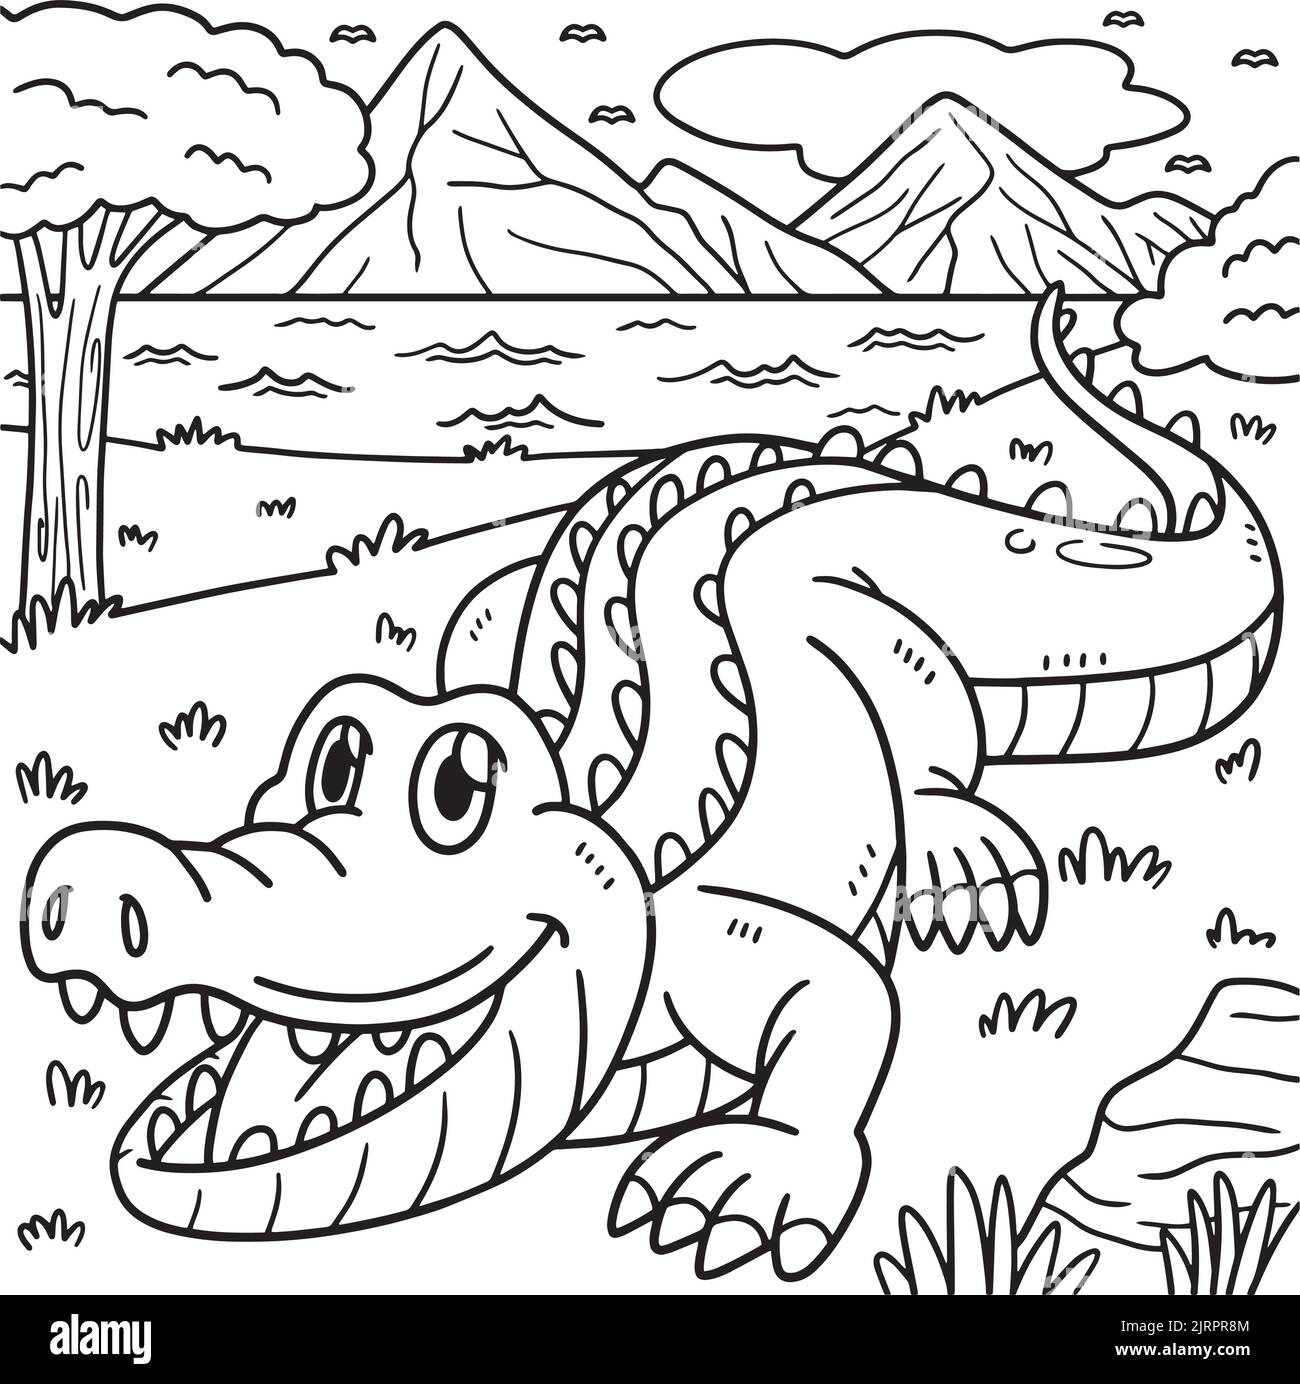 Crocodile Animal Coloring Page for Kids Stock Vector Image & Art - Alamy